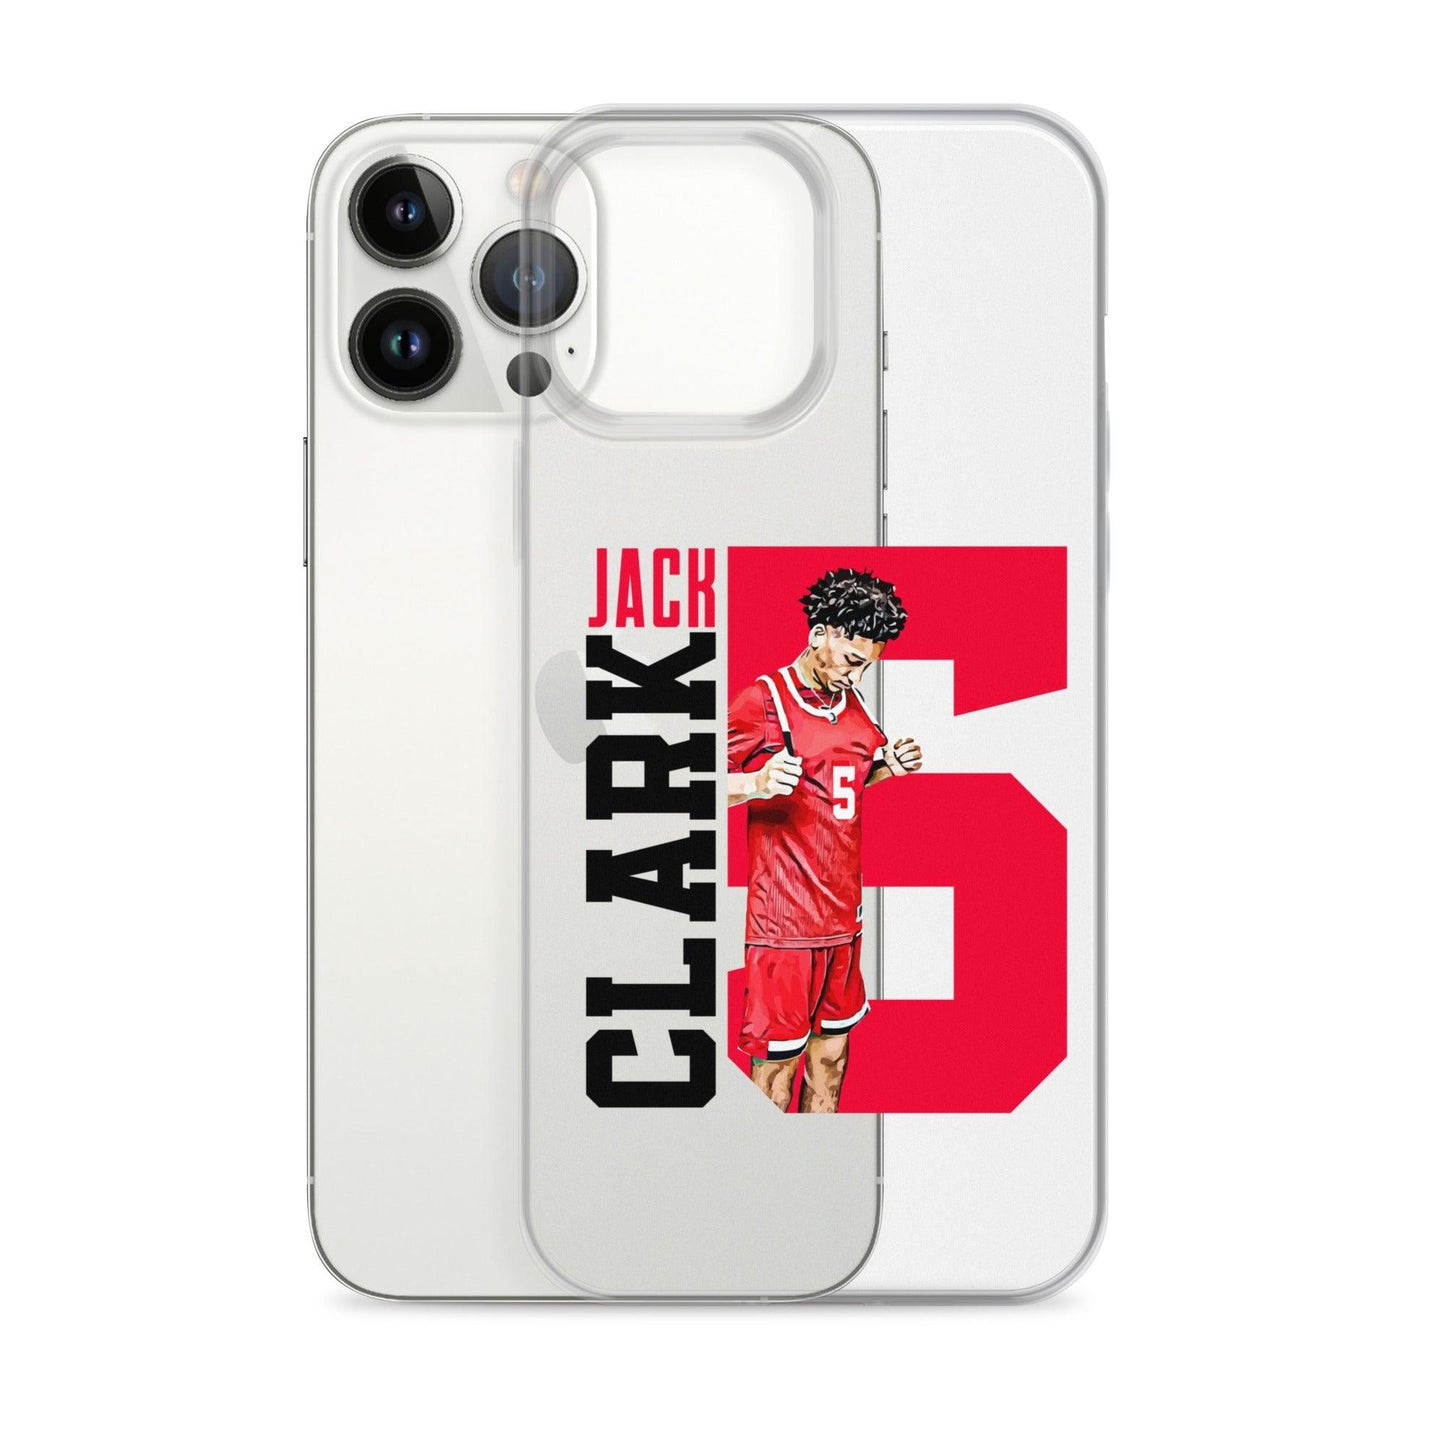 Jack Clark "Gametime" iPhone Case - Fan Arch